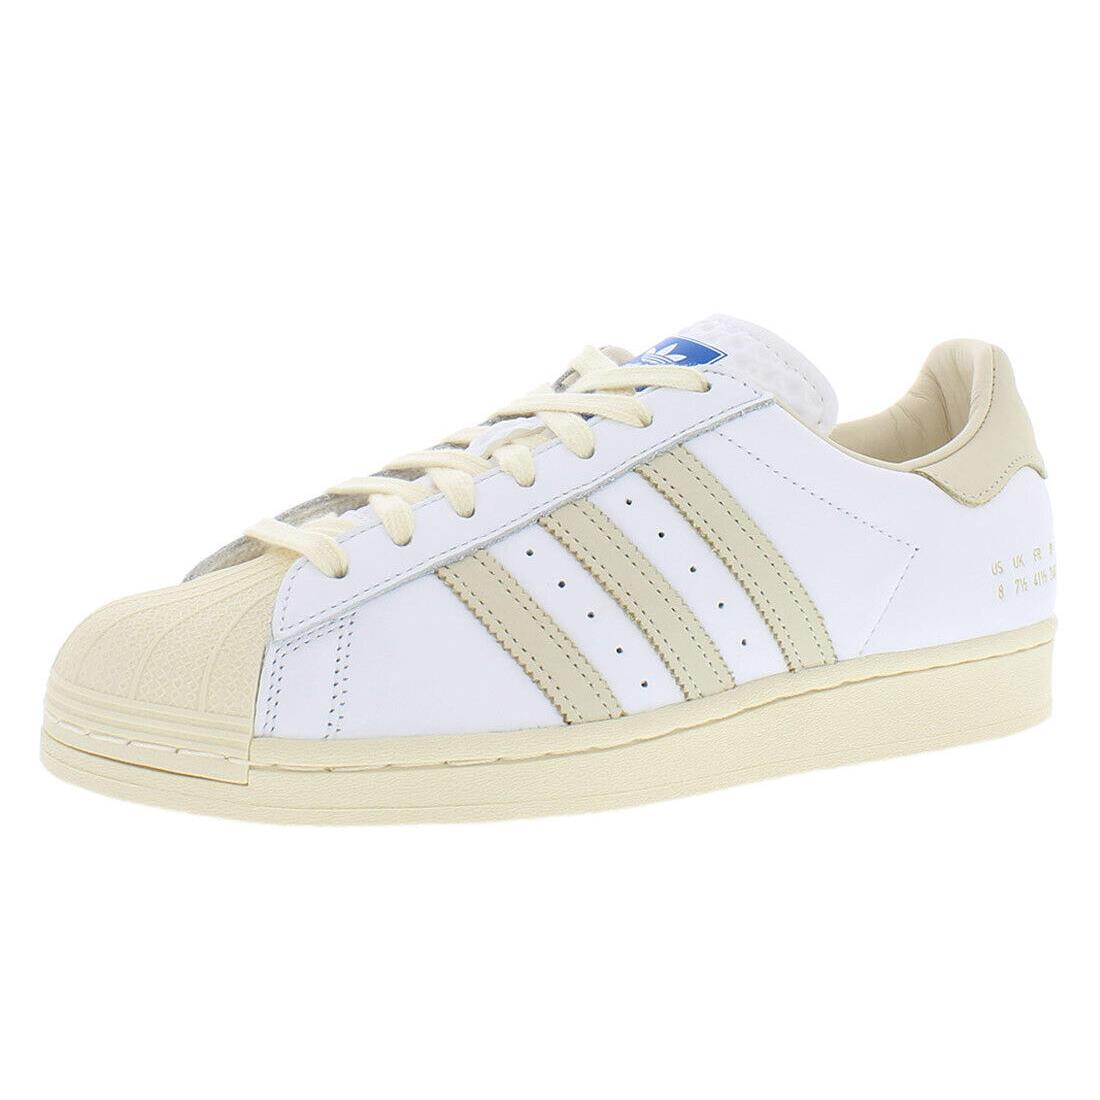 Adidas Originals Superstar Mens Shoes - Footwear White/White/Blue, Main: White